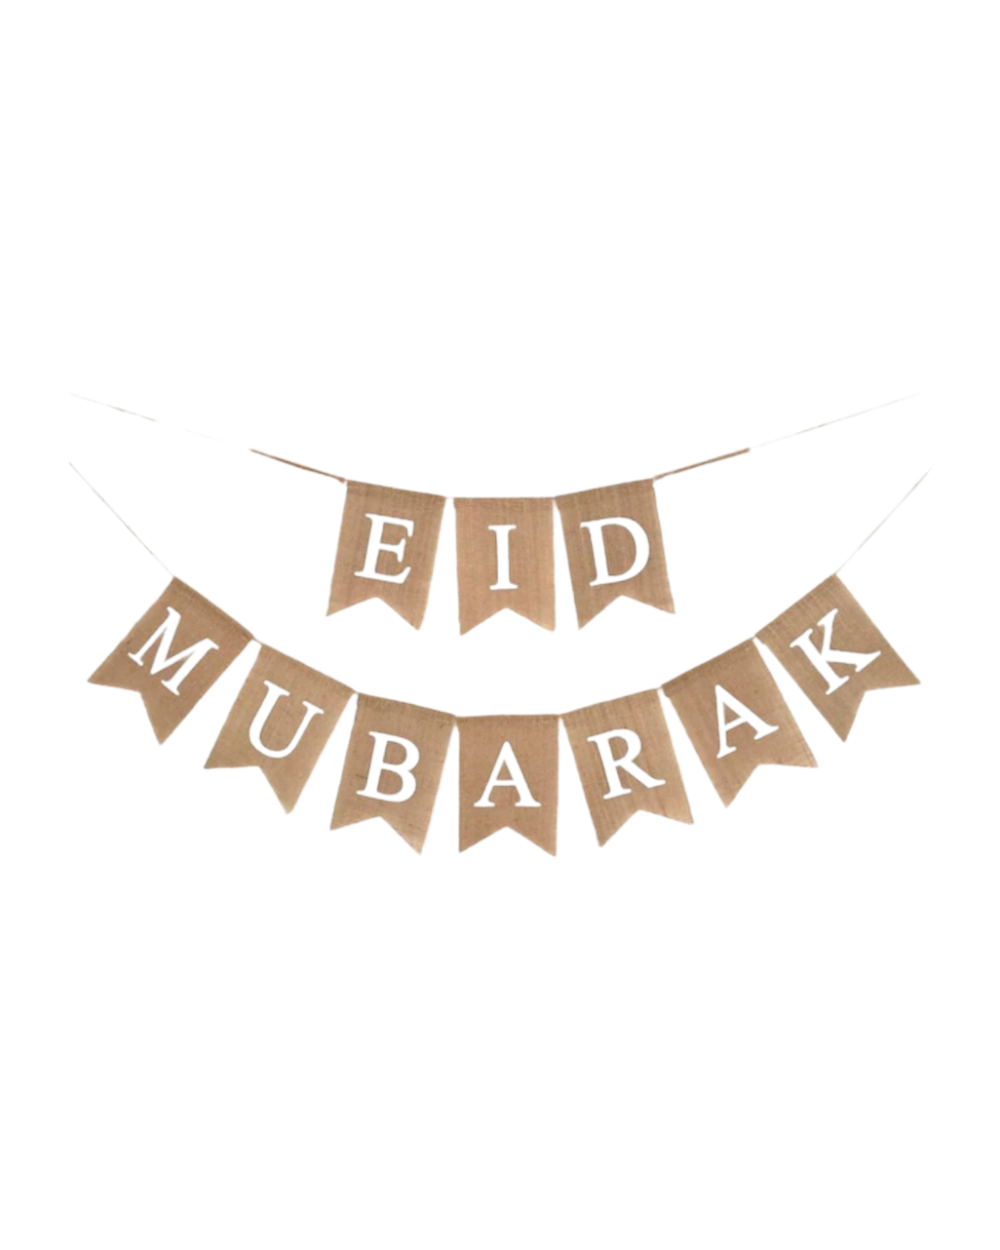 Banderole Eid Mubarak - Toile de jute